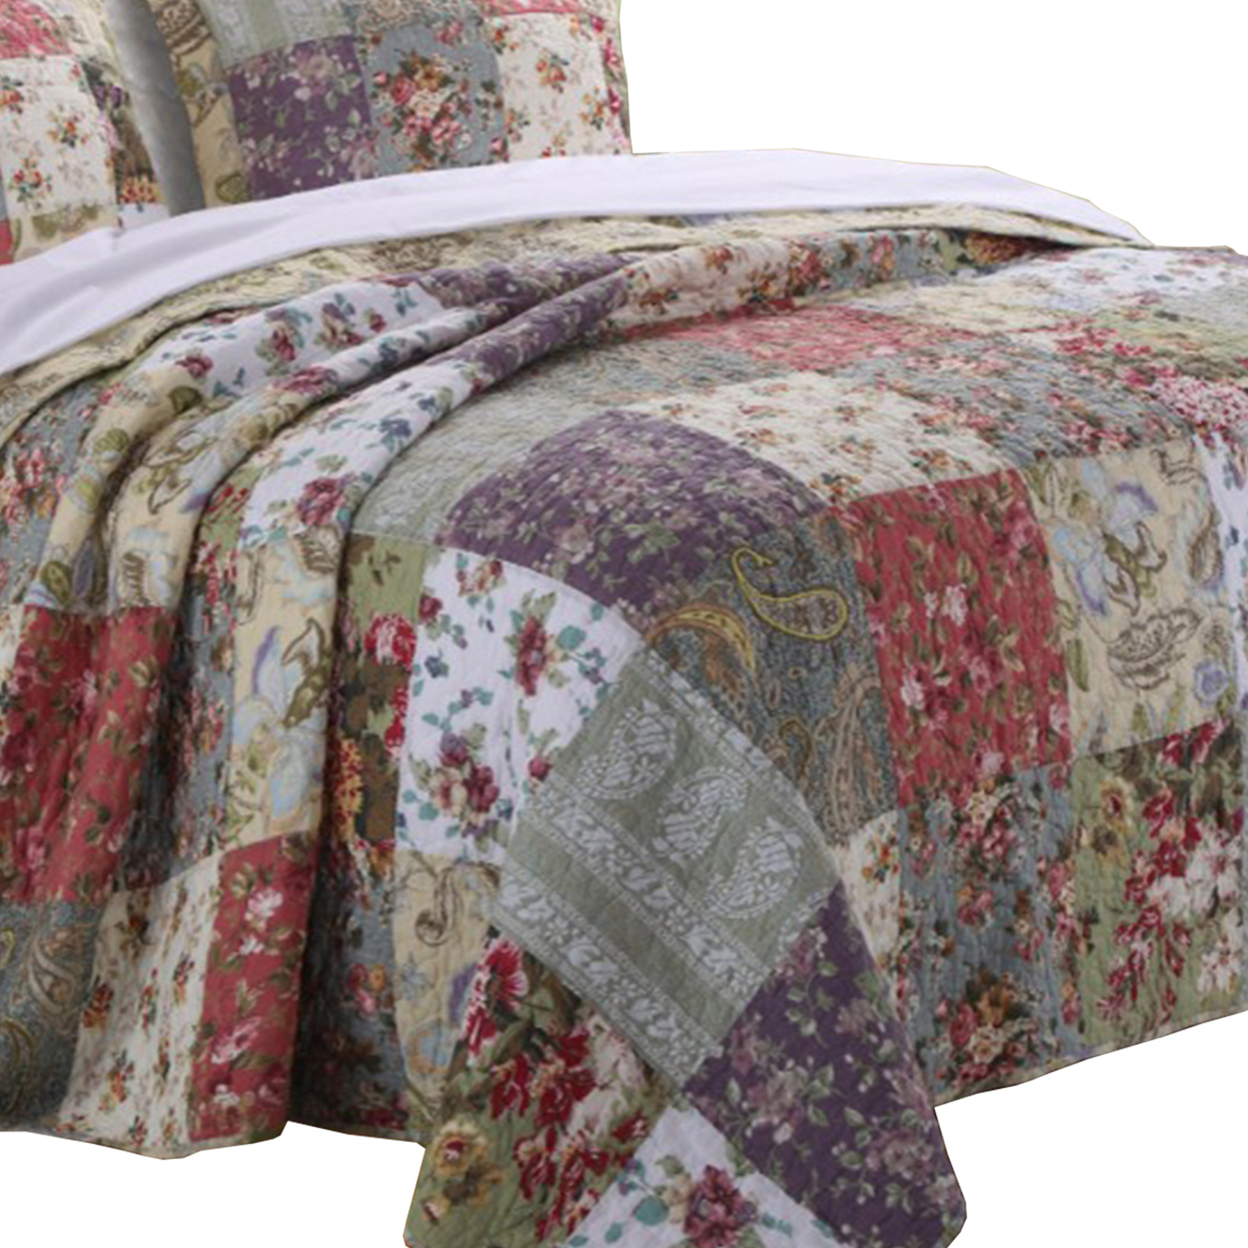 Chicago 3 Piece Fabric Queen Bedspread Set With Jacobean Prints, Multicolor- Saltoro Sherpi